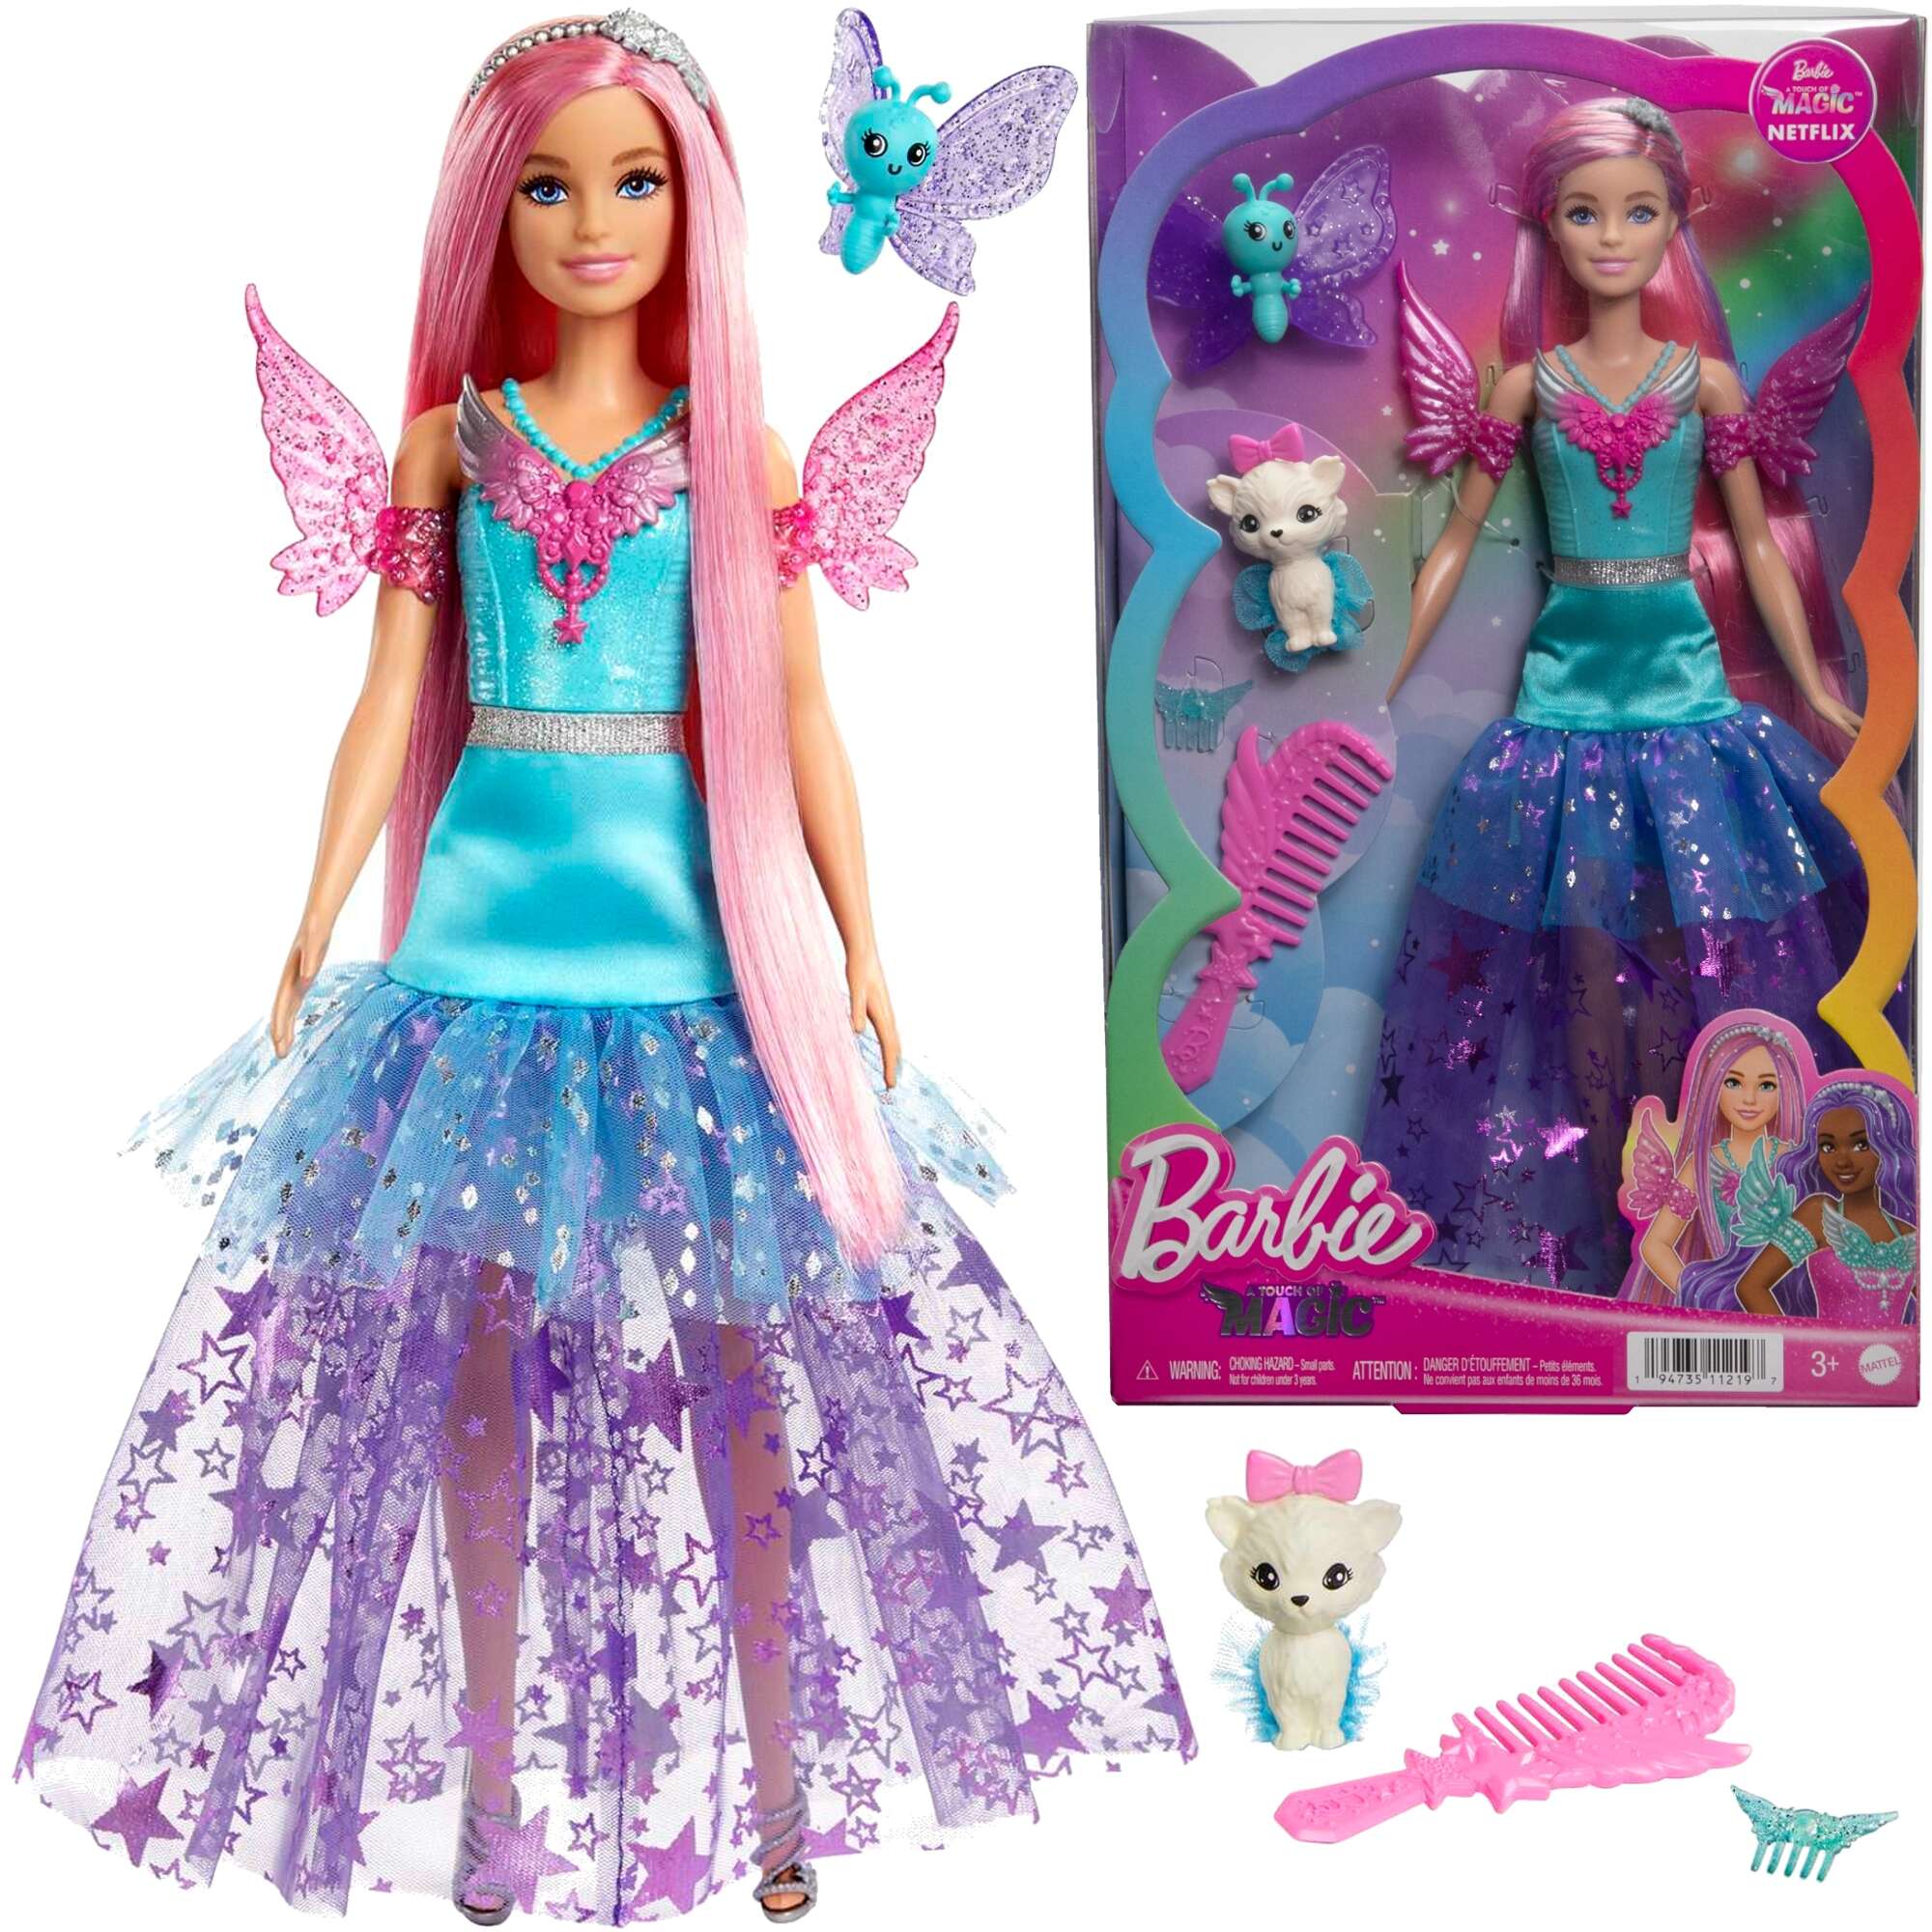 Barbie may zestaw Lalka Kolekcjonerska a Touch of Magic rowowosa wrka + pupile i akcesoria